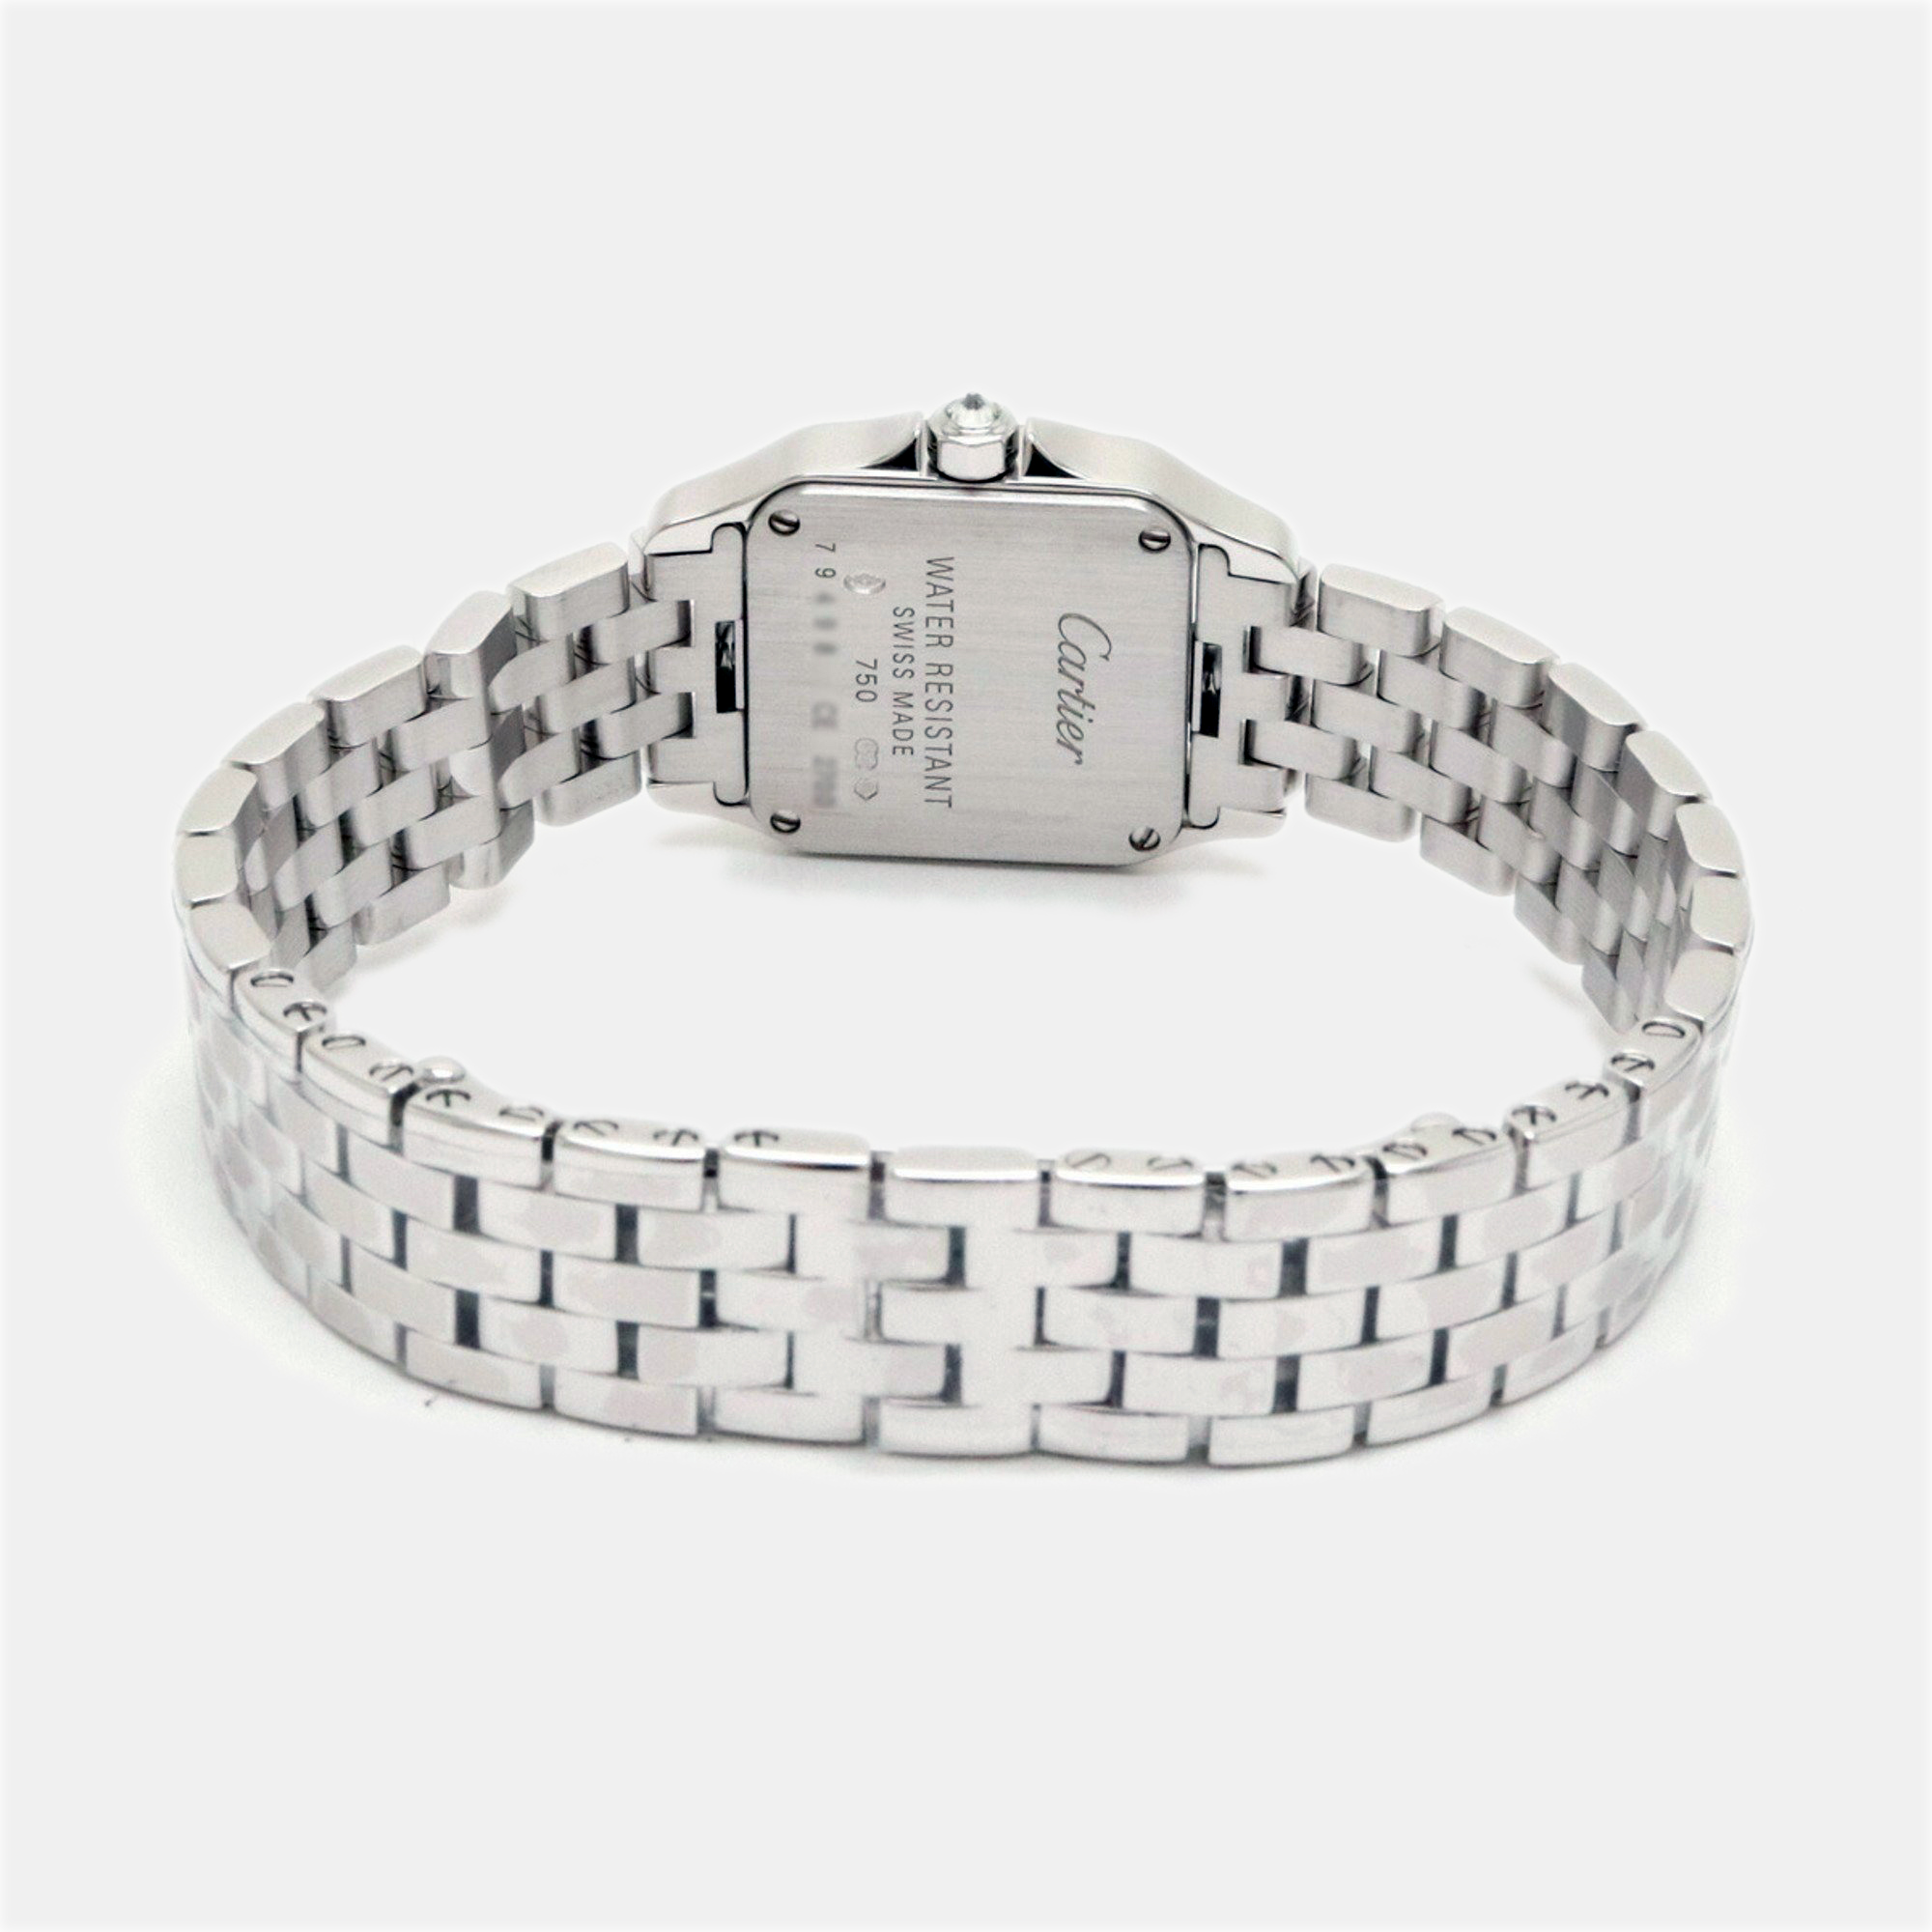 Cartier Silver Diamond 18k White Gold Santos Demoiselle WF9003Y8 Quartz Women's Wristwatch 20 Mm